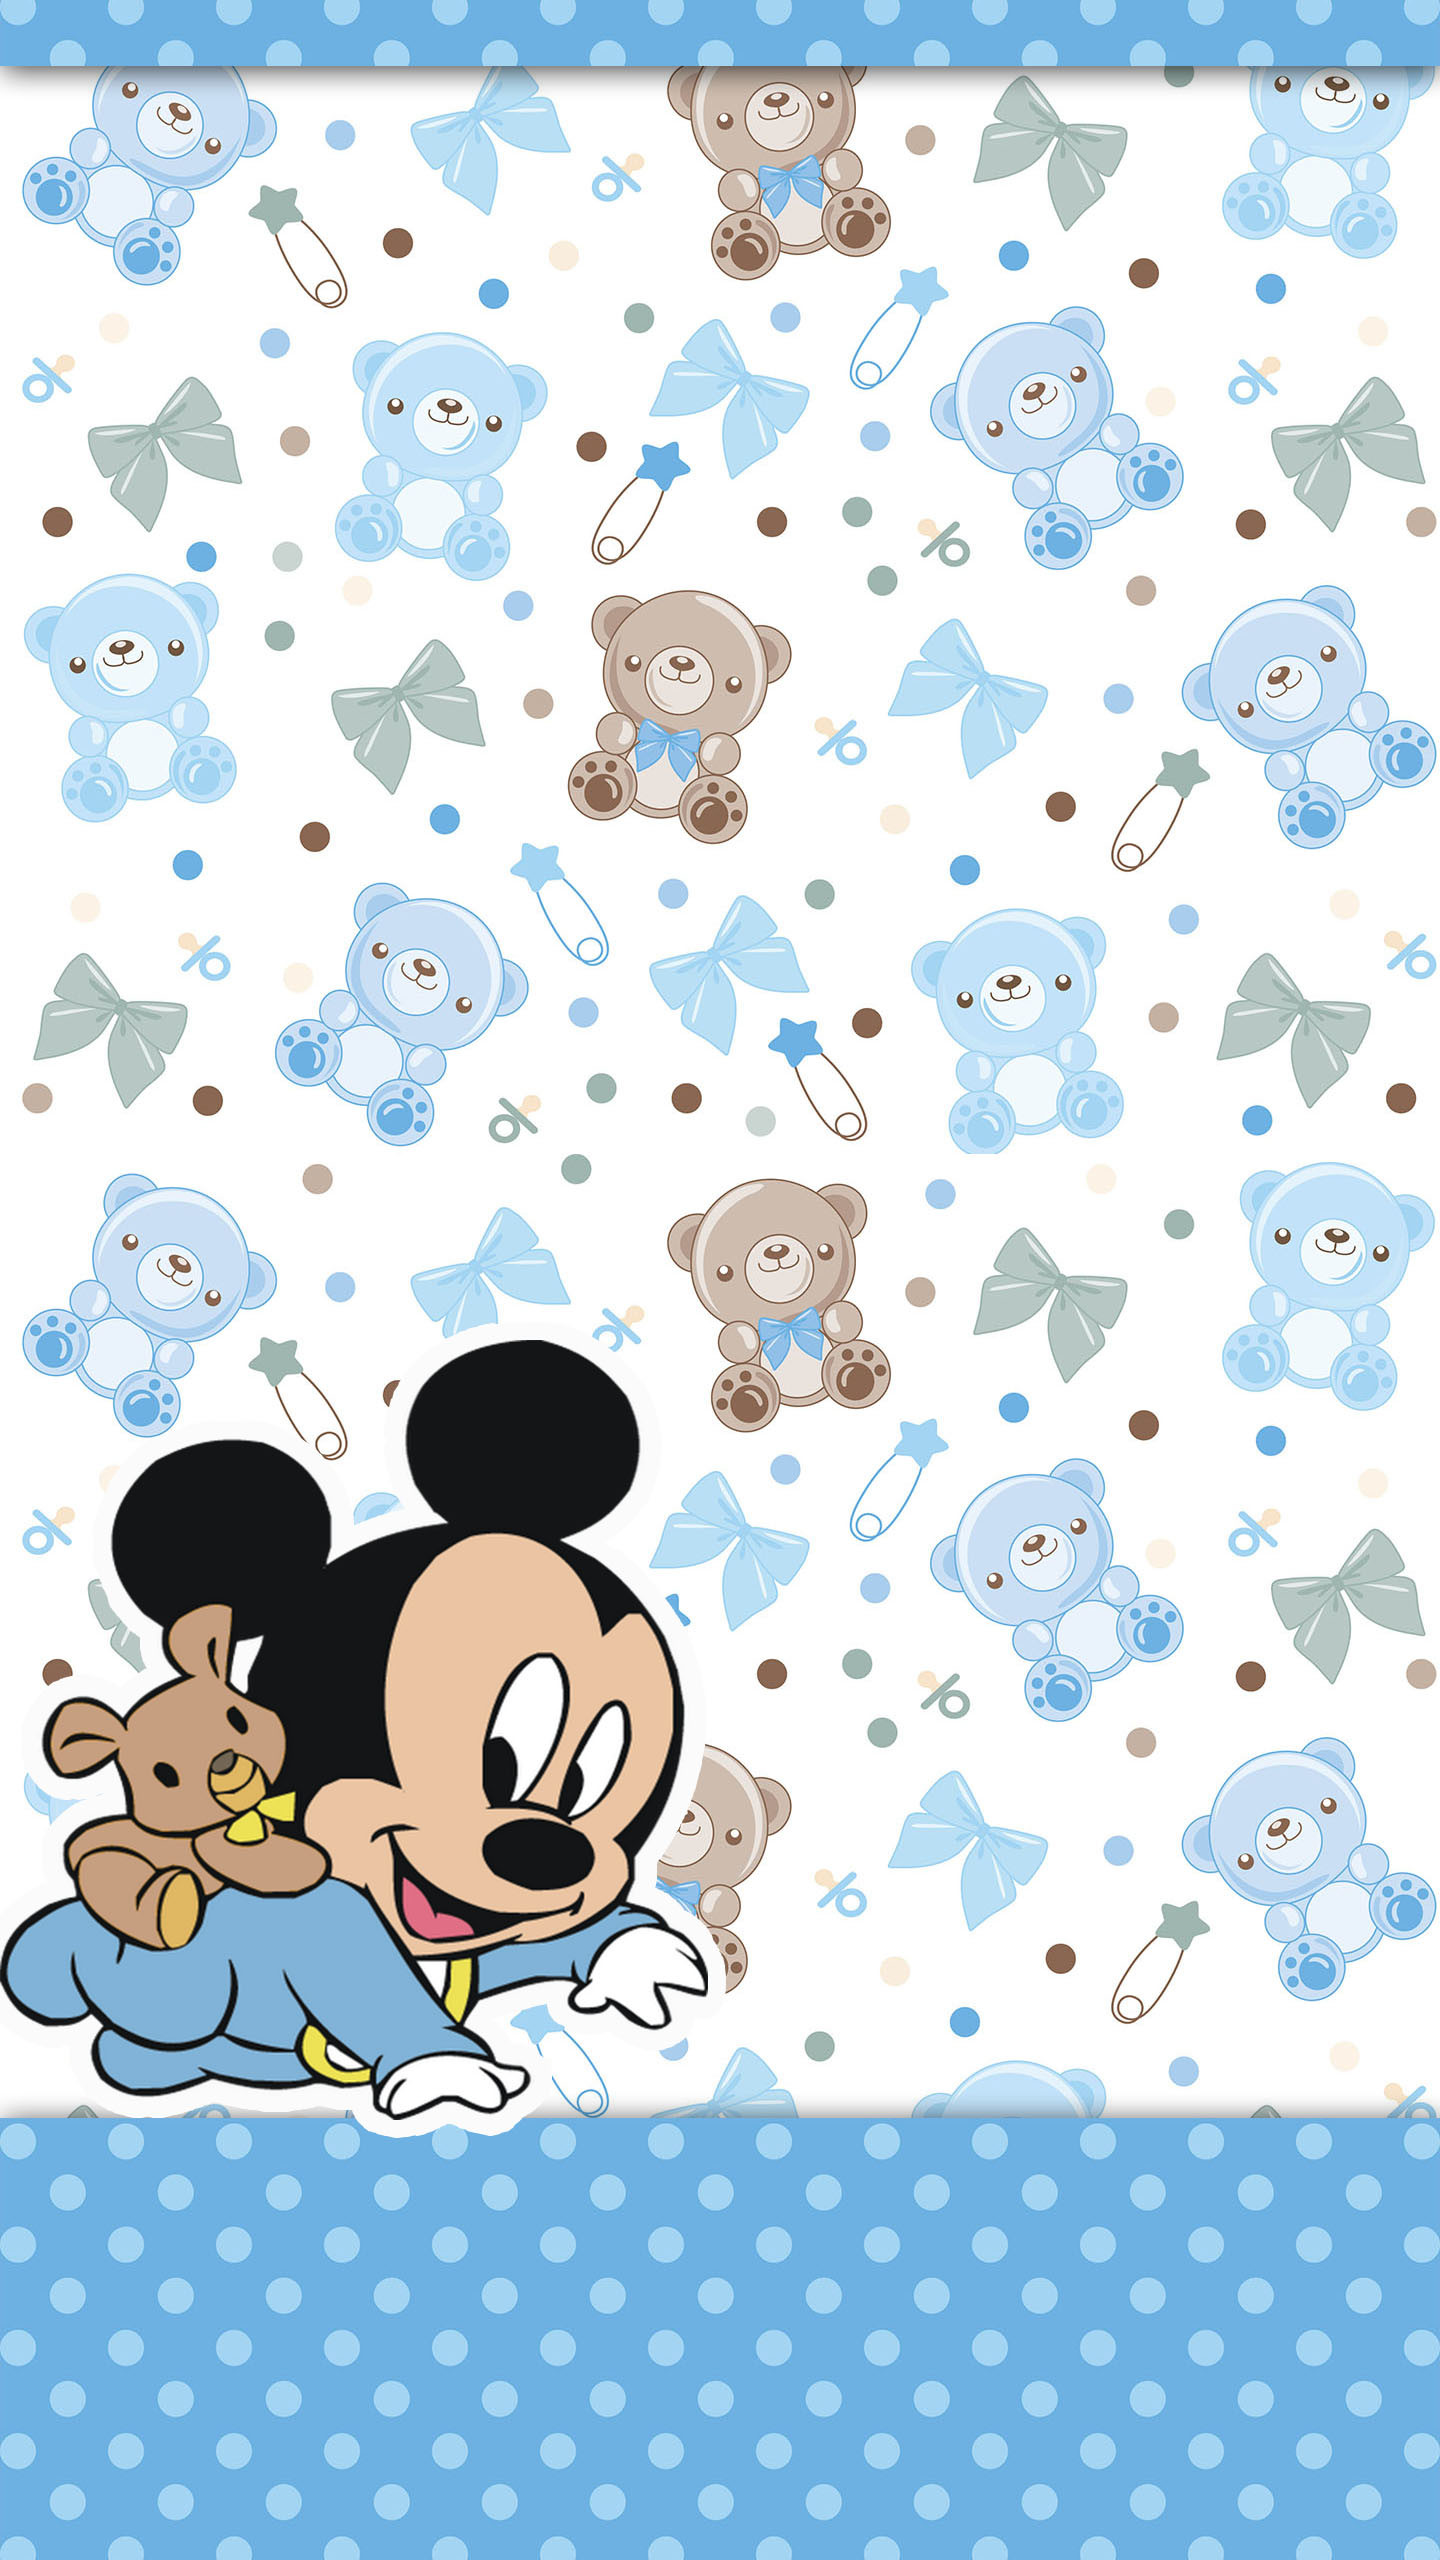 1440x2560 f90a71a0eeb9bace1c4ee579fcc4c899.jpg (1440Ã2560) Â· Disney MickeyMickey Mouse Baby ...